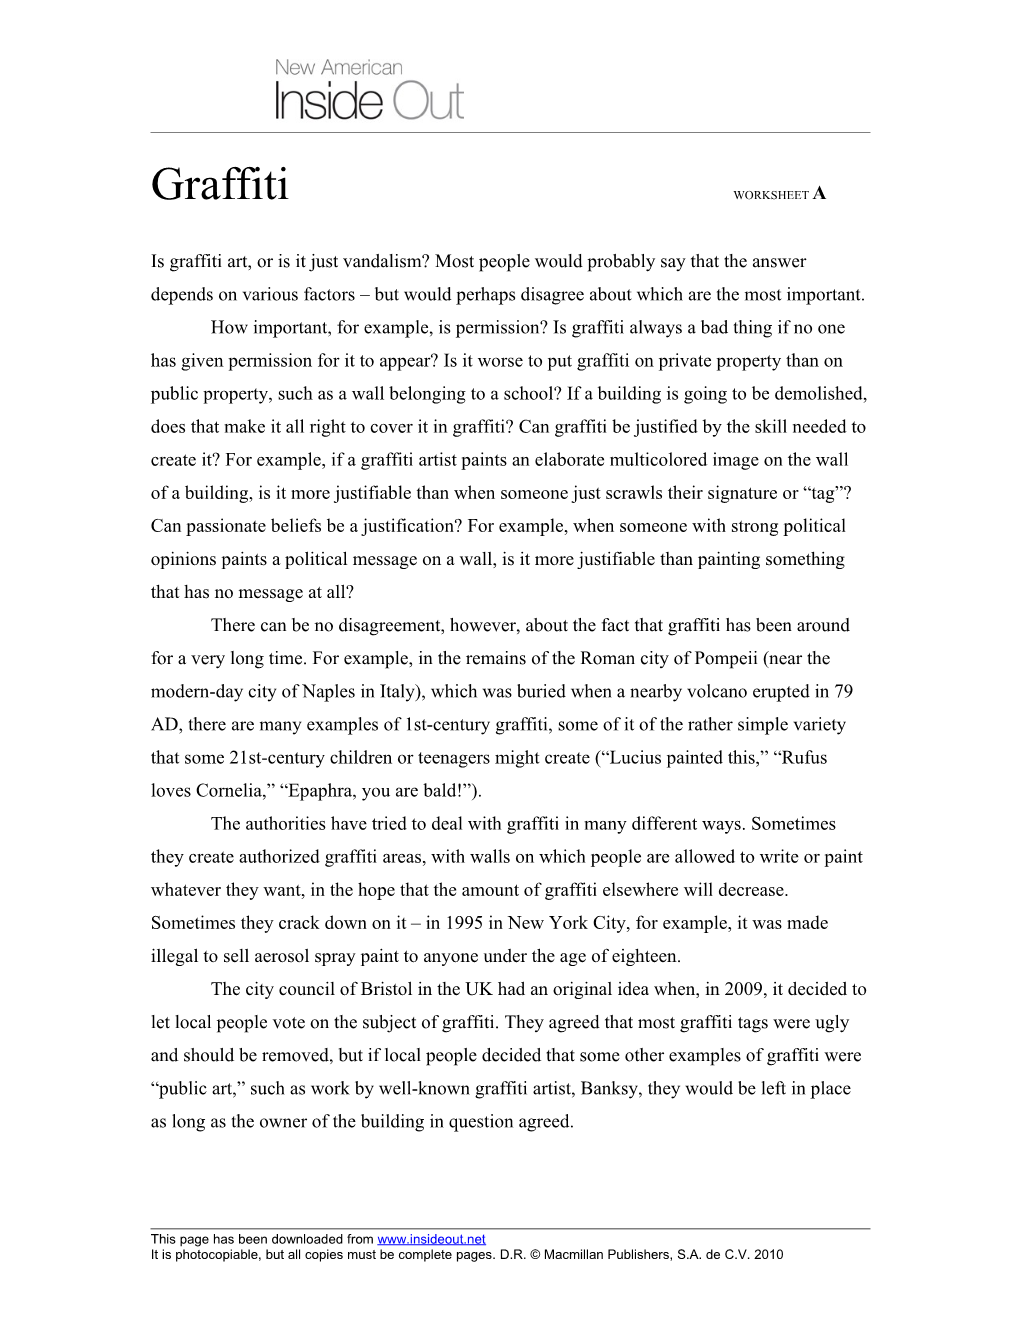 Graffiti Worksheet A